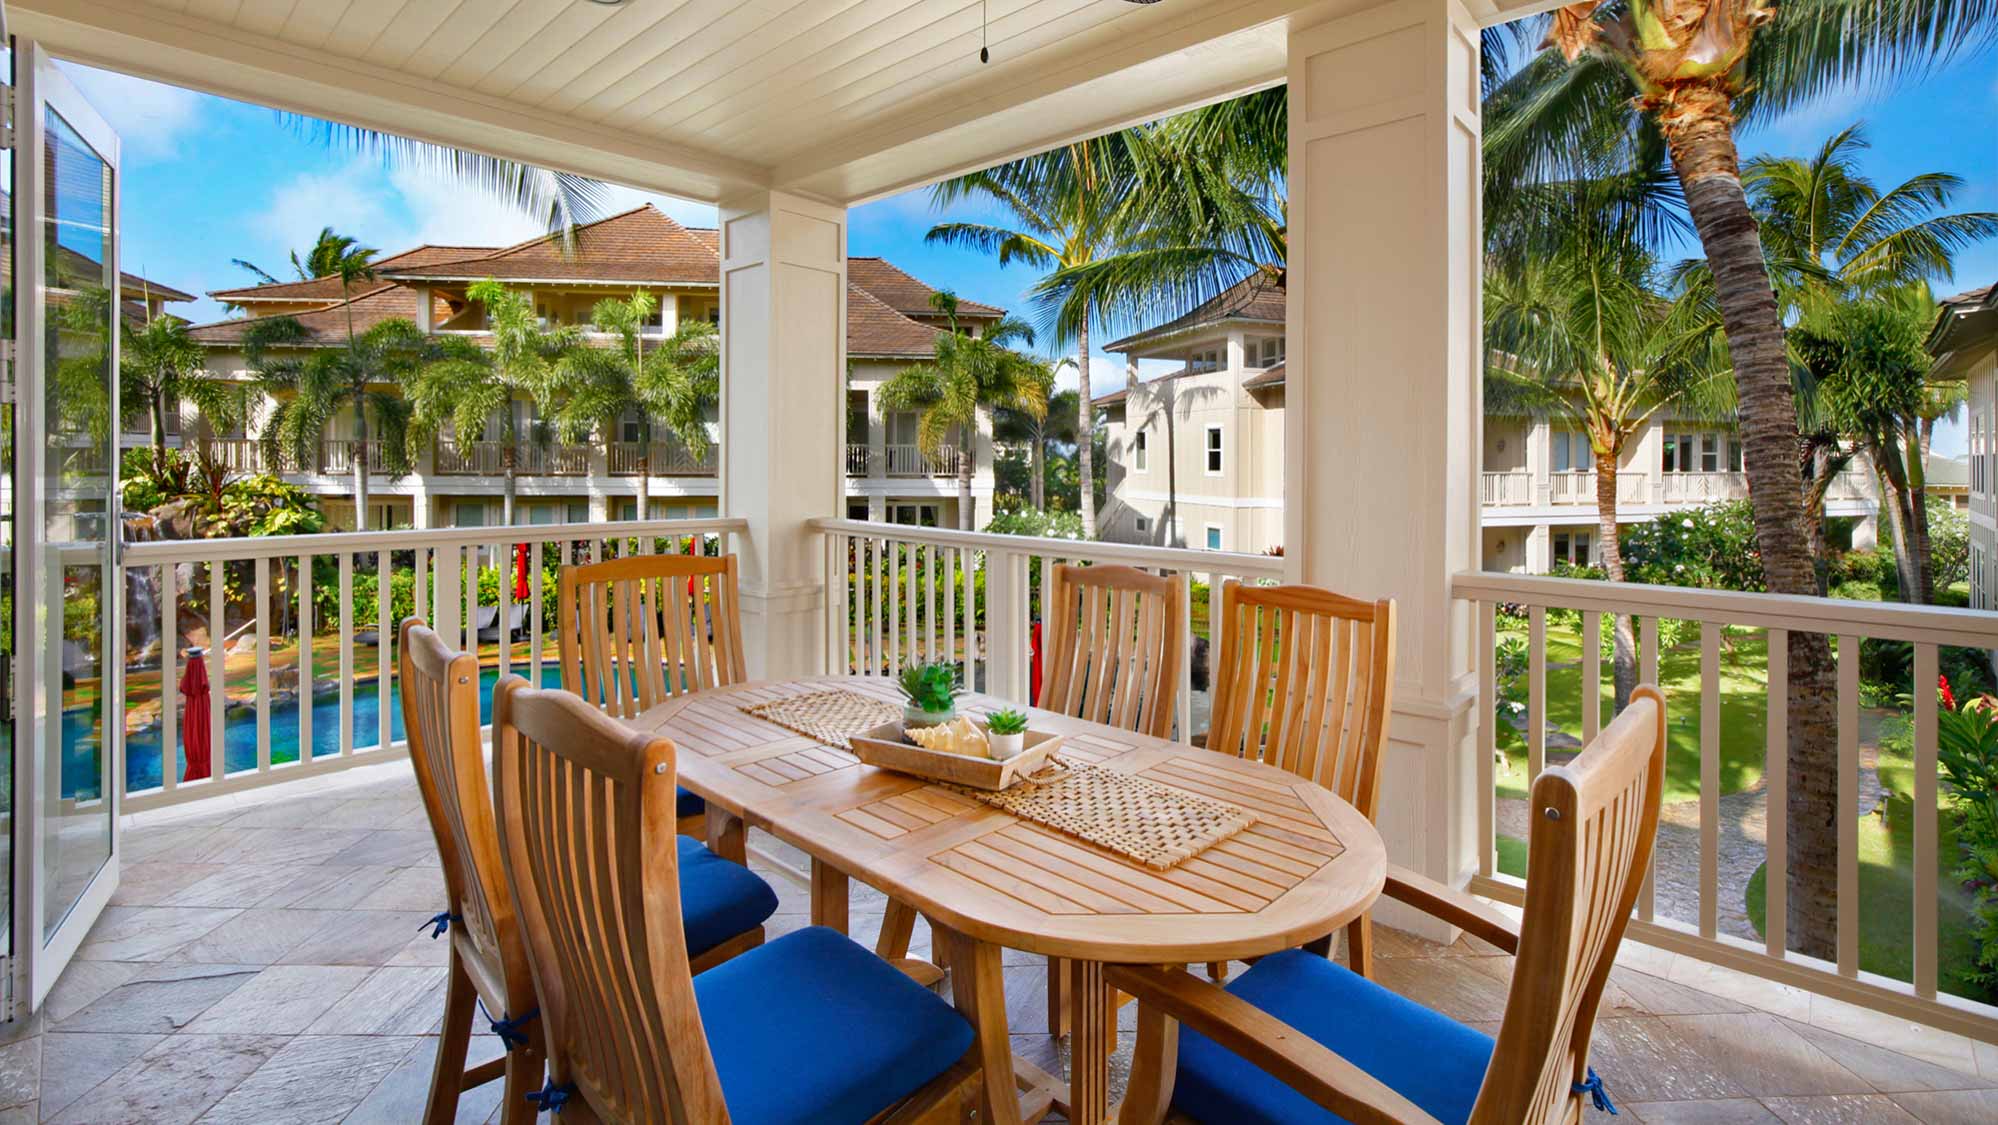 Villas at Poipu Kai #E210 - Covered Dining Lanai with Pool View - Parrish Kauai